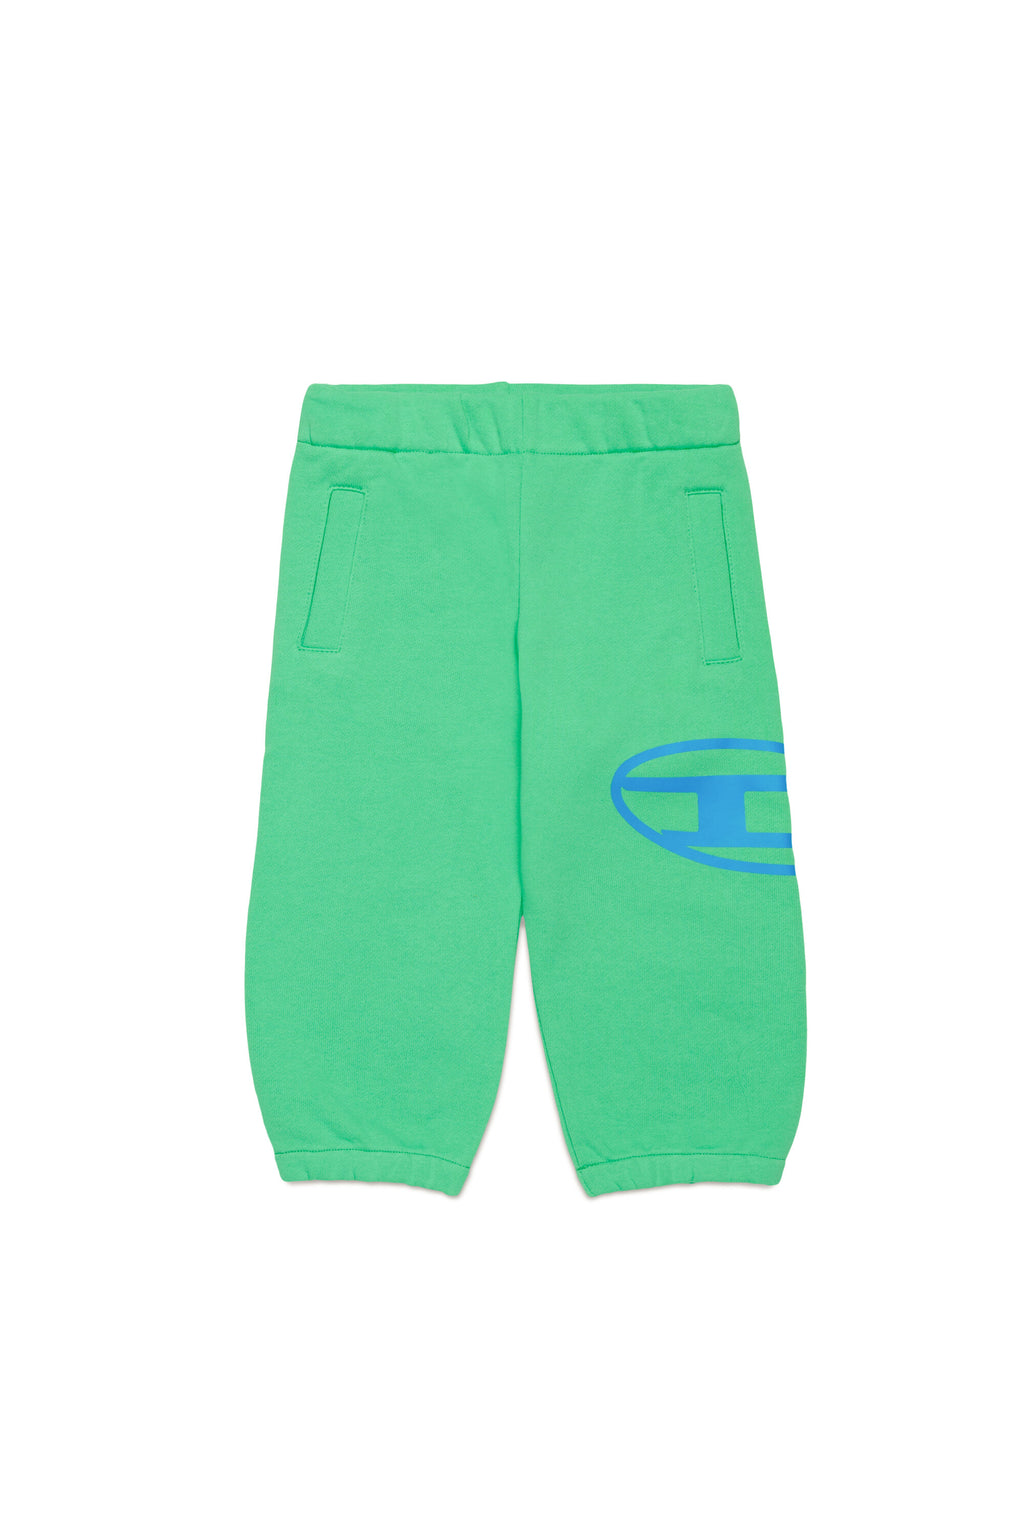 Pantalones deportivos en chándal con logotipo Oval D